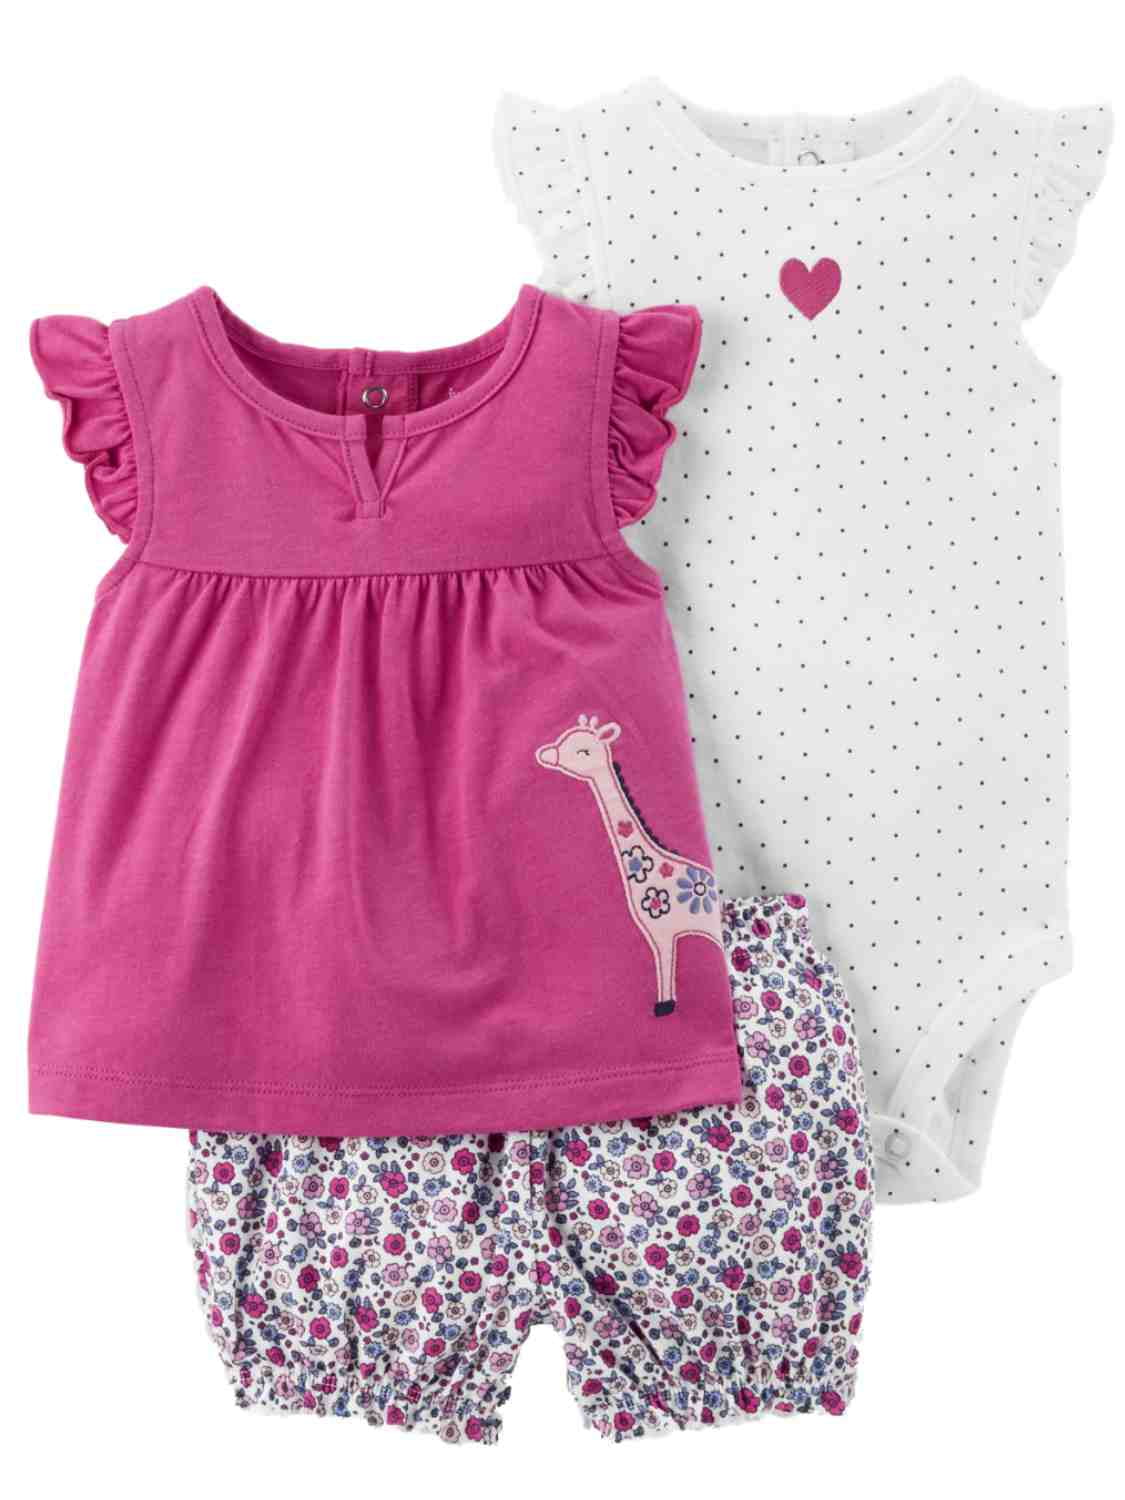 Carters Infant Girls Pink Giraffe Baby Outfit Bodysuit Shirt & Shorts ...